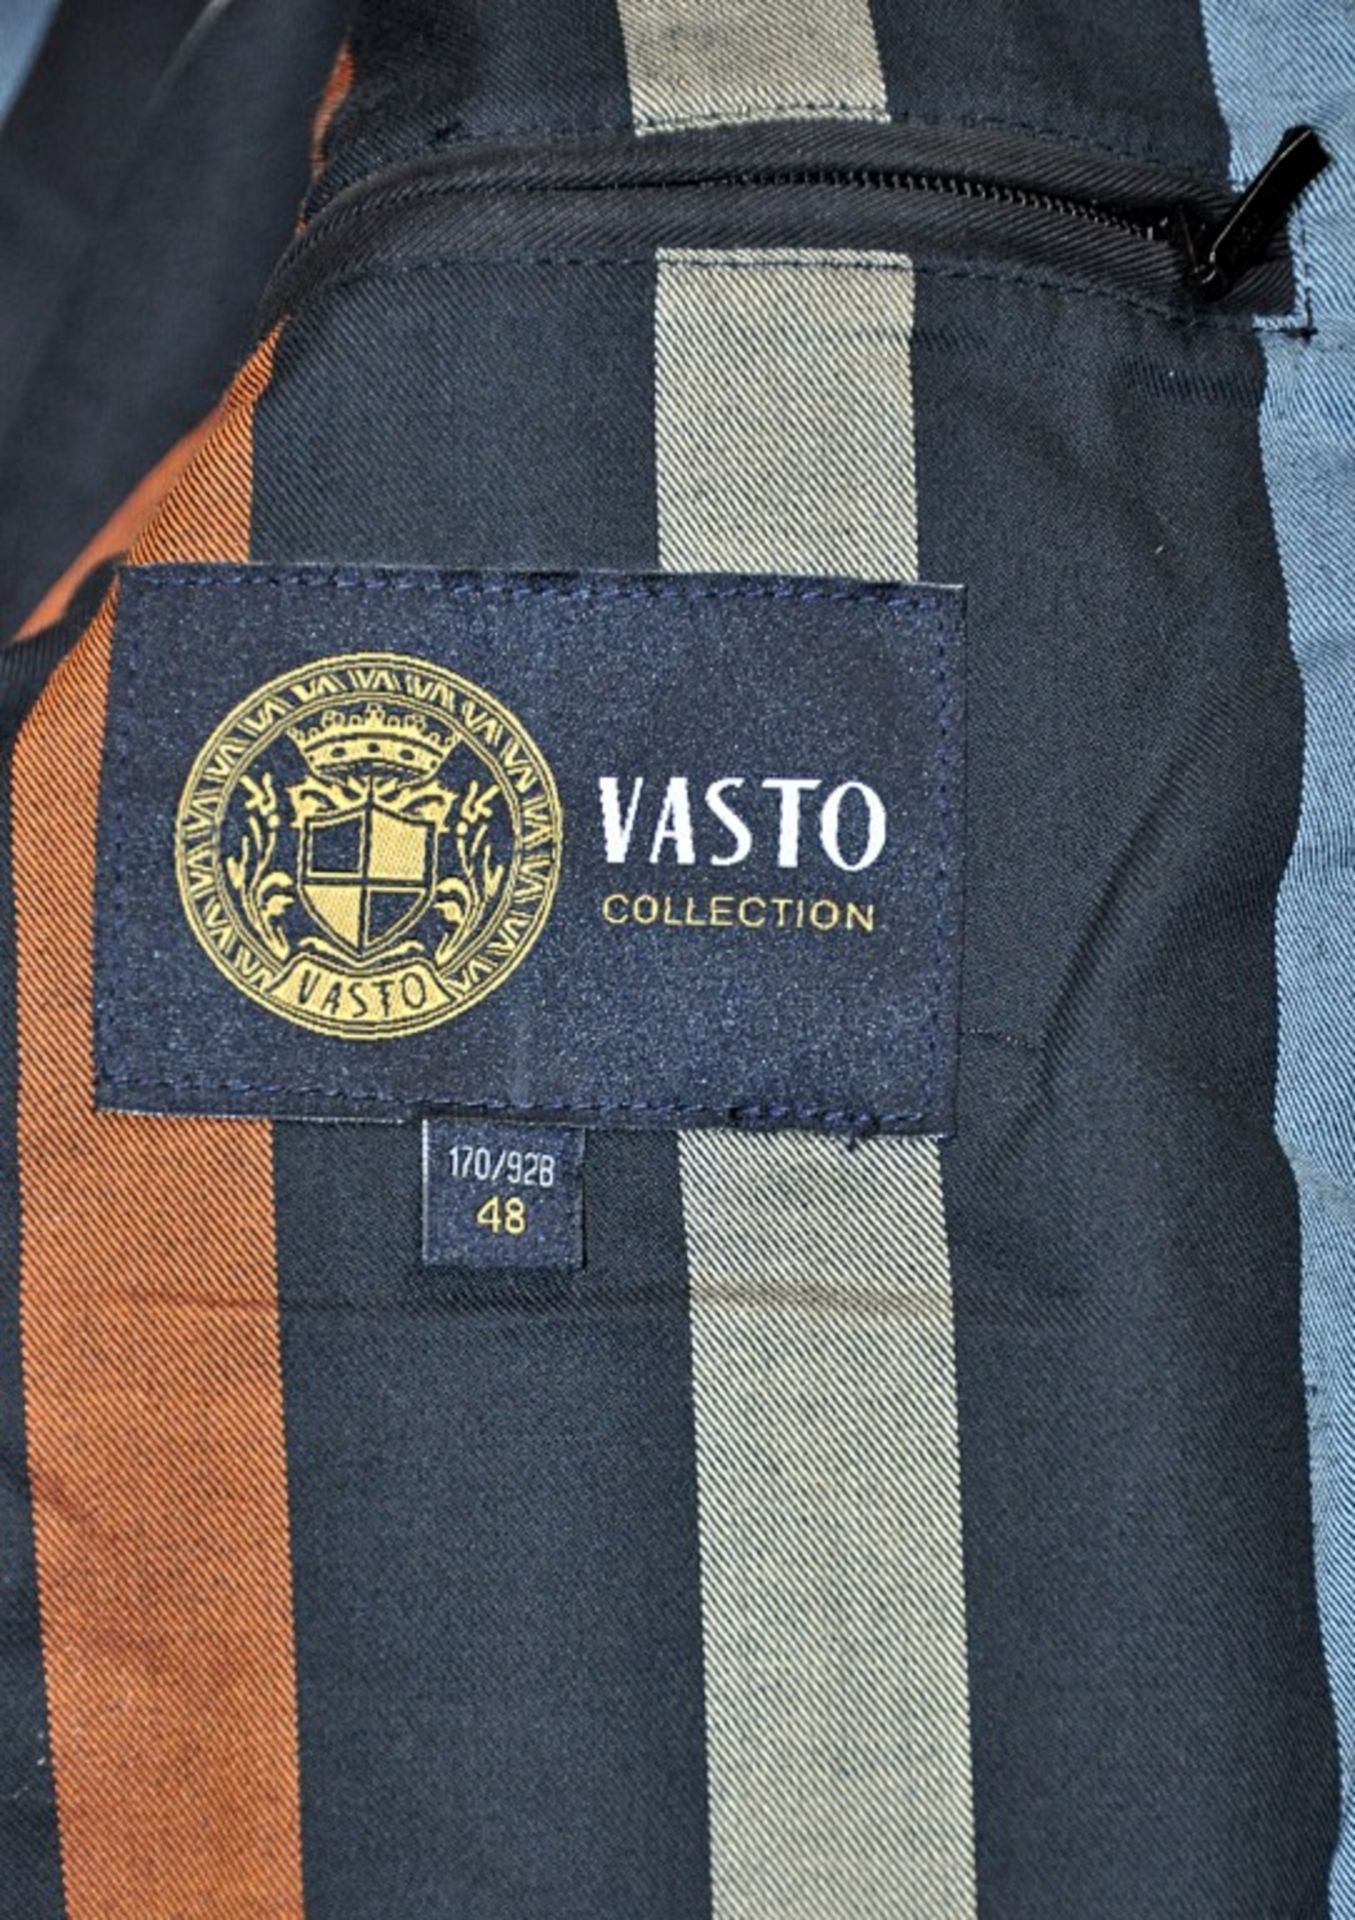 1 x Men's Long Sleeve Casual Jacket By International Luxury Brand "Vasto" (BAJ72241) – Size: - Image 4 of 6